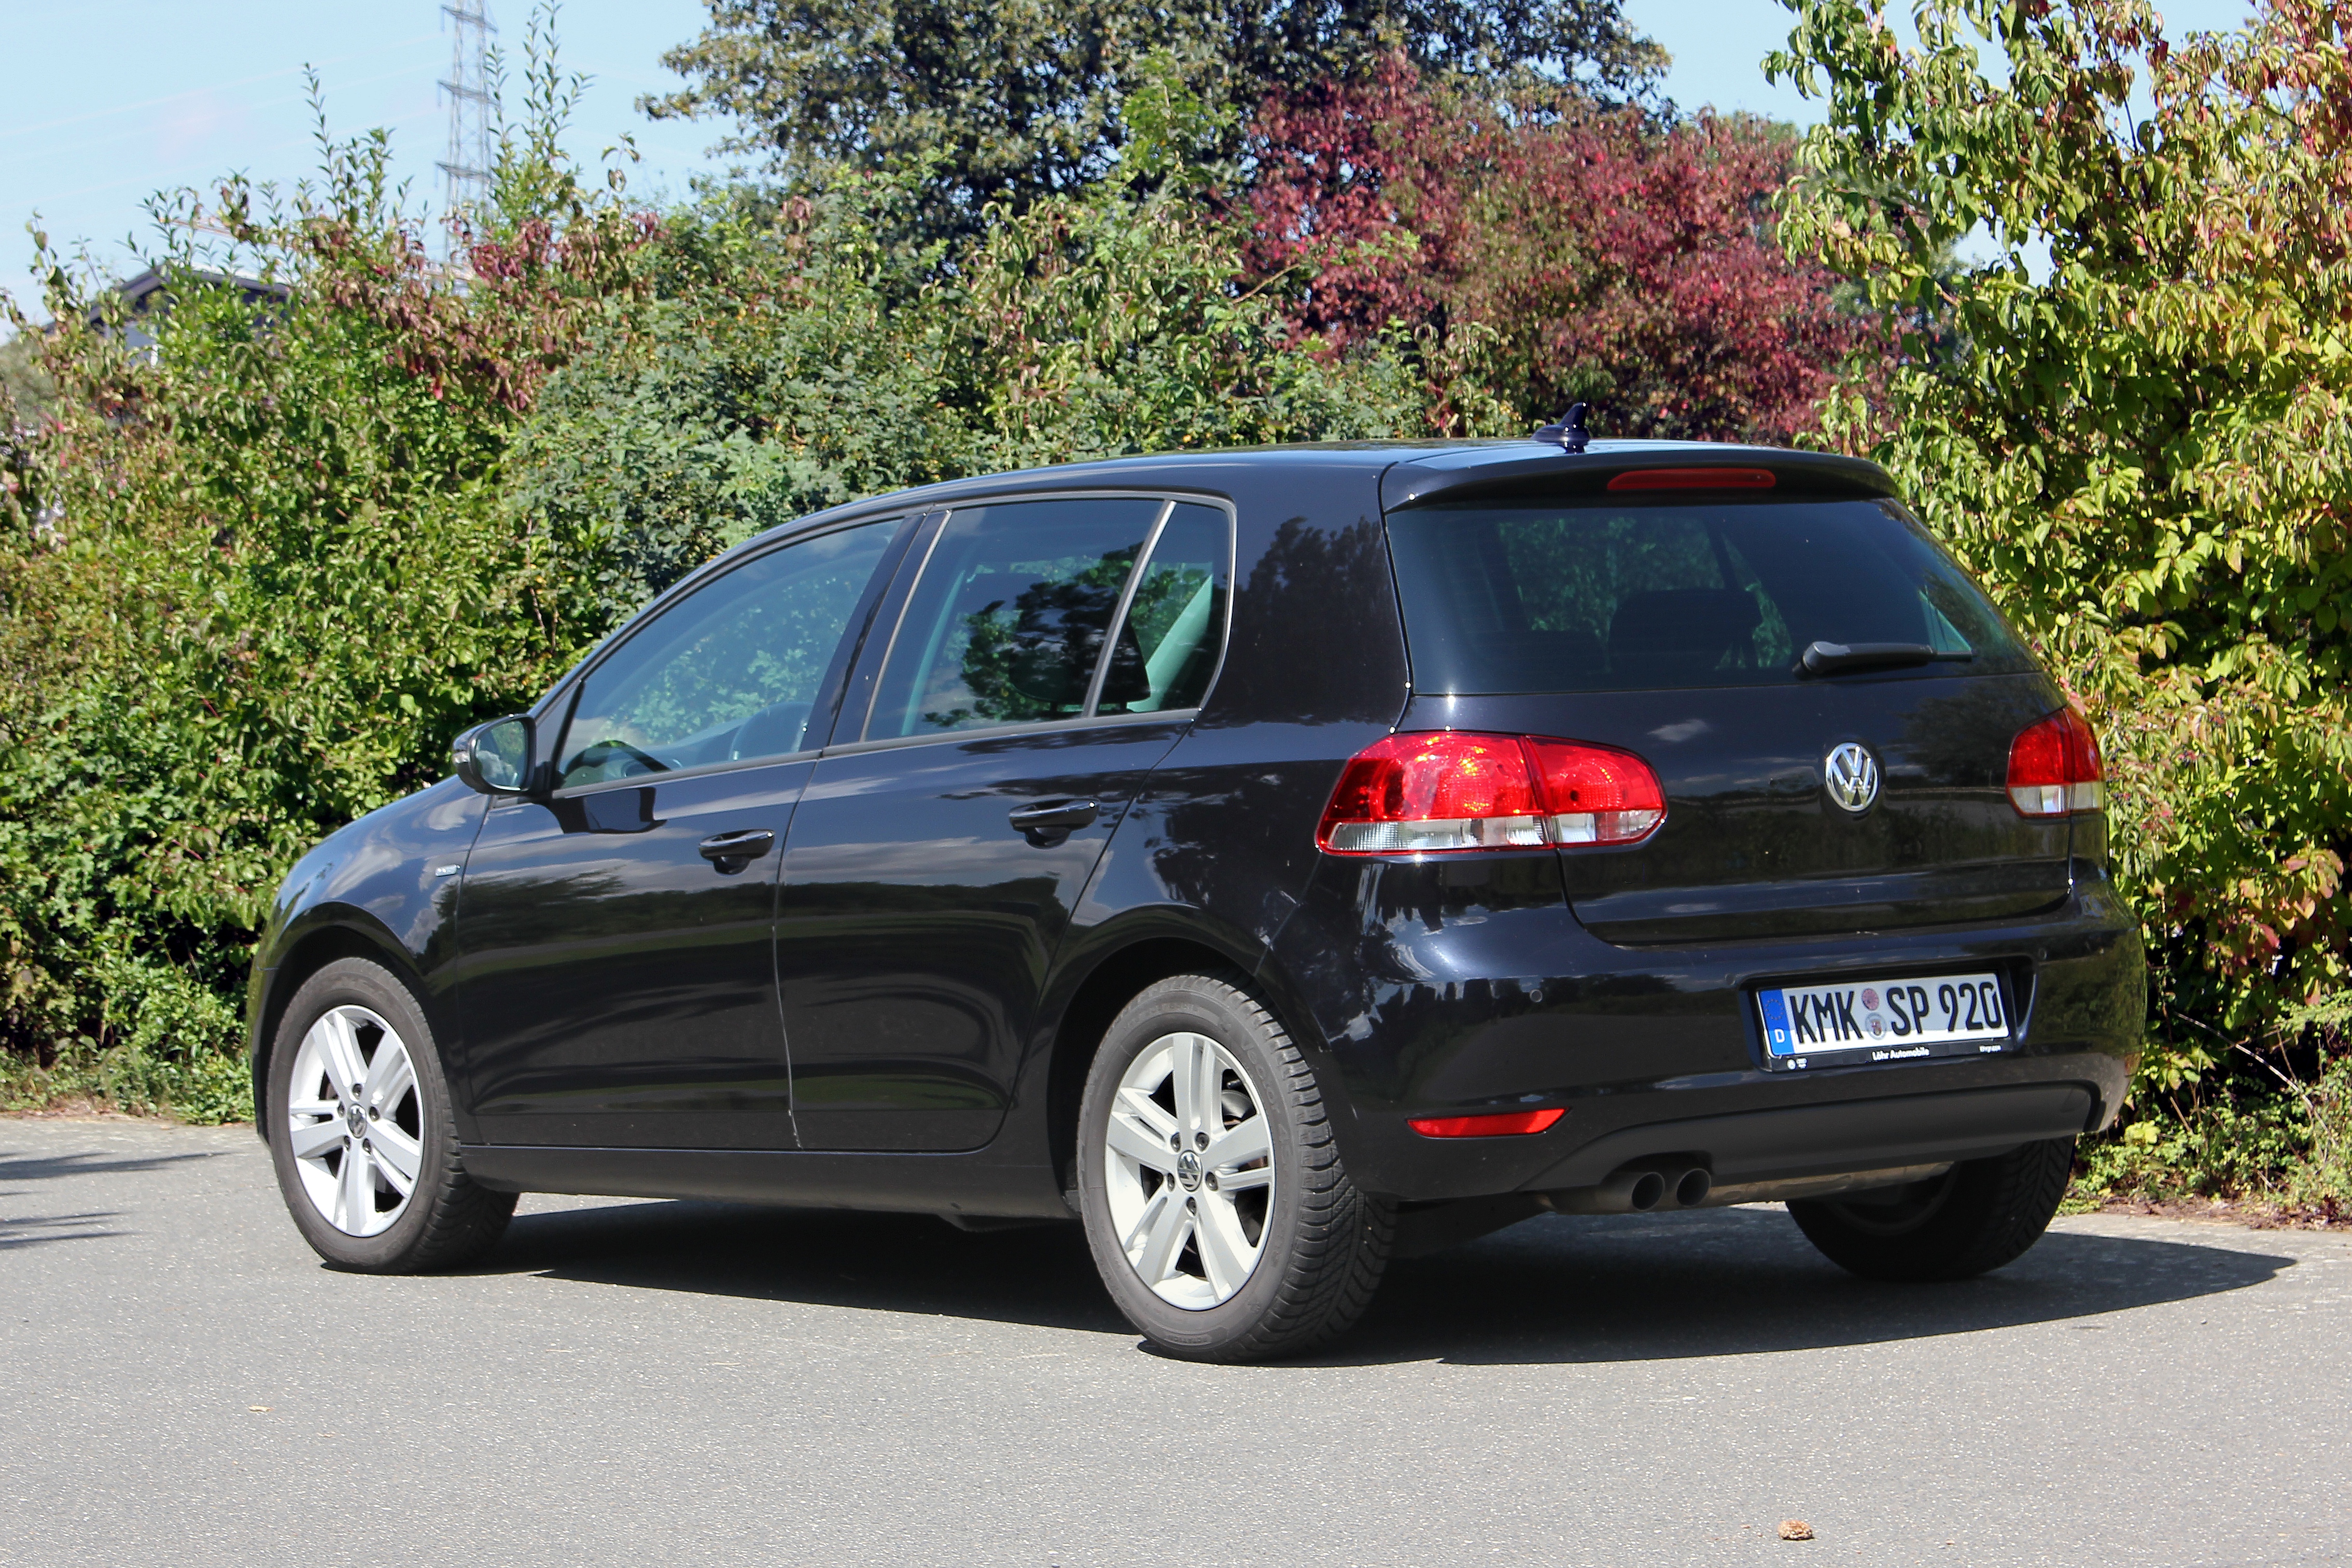 VW Golf TDI 2,0 l Match (2015-08-05 1c)